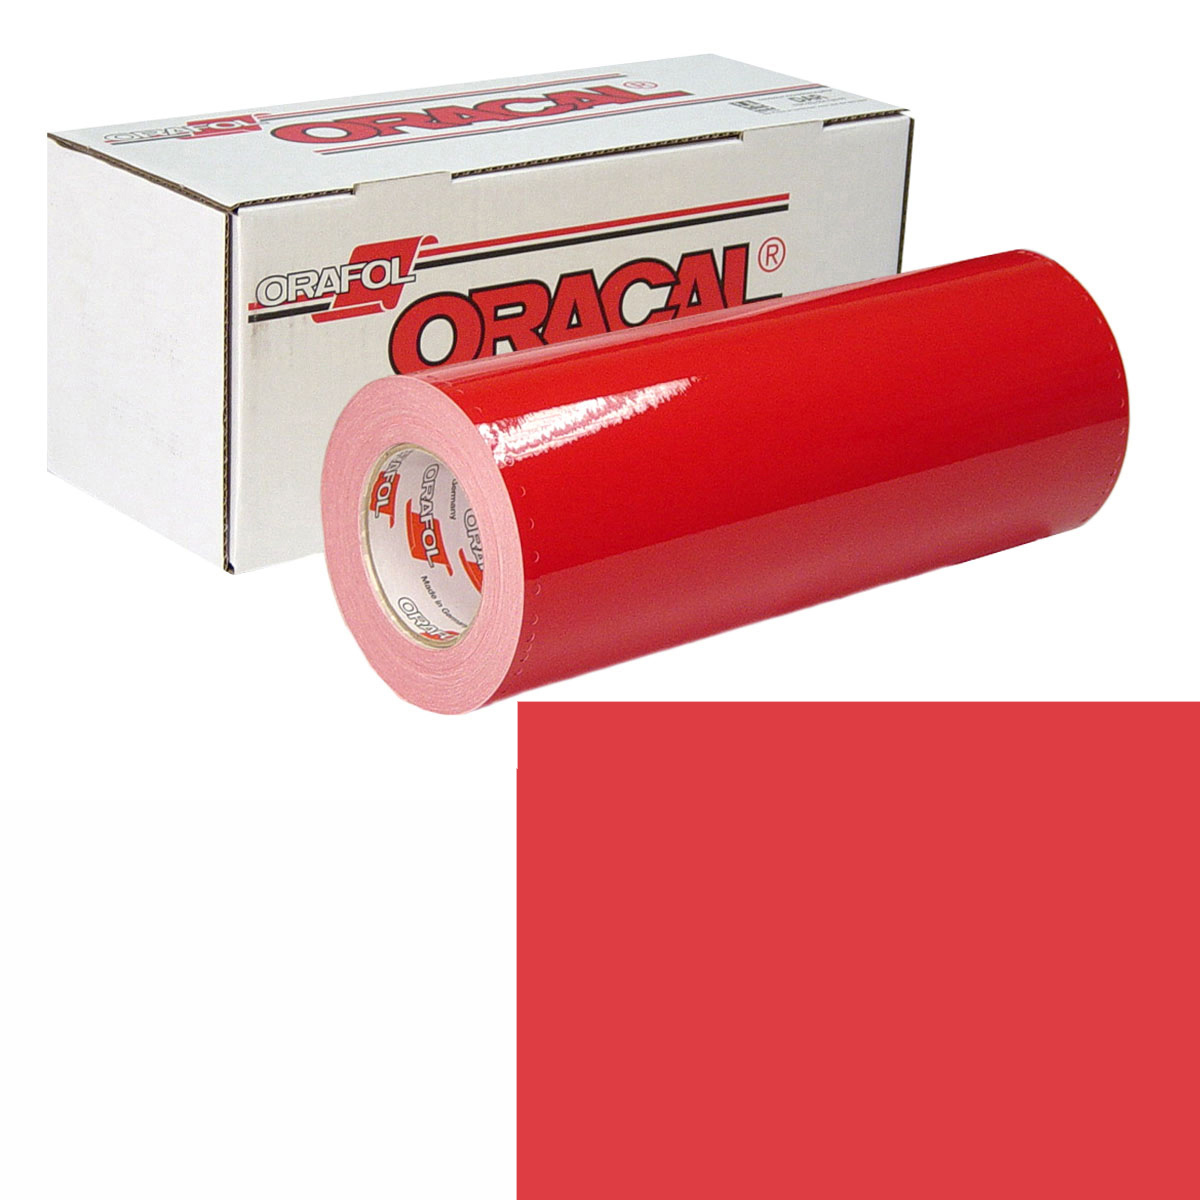 ORACAL 951 Unp 24in X 10yd 347 Red Coral